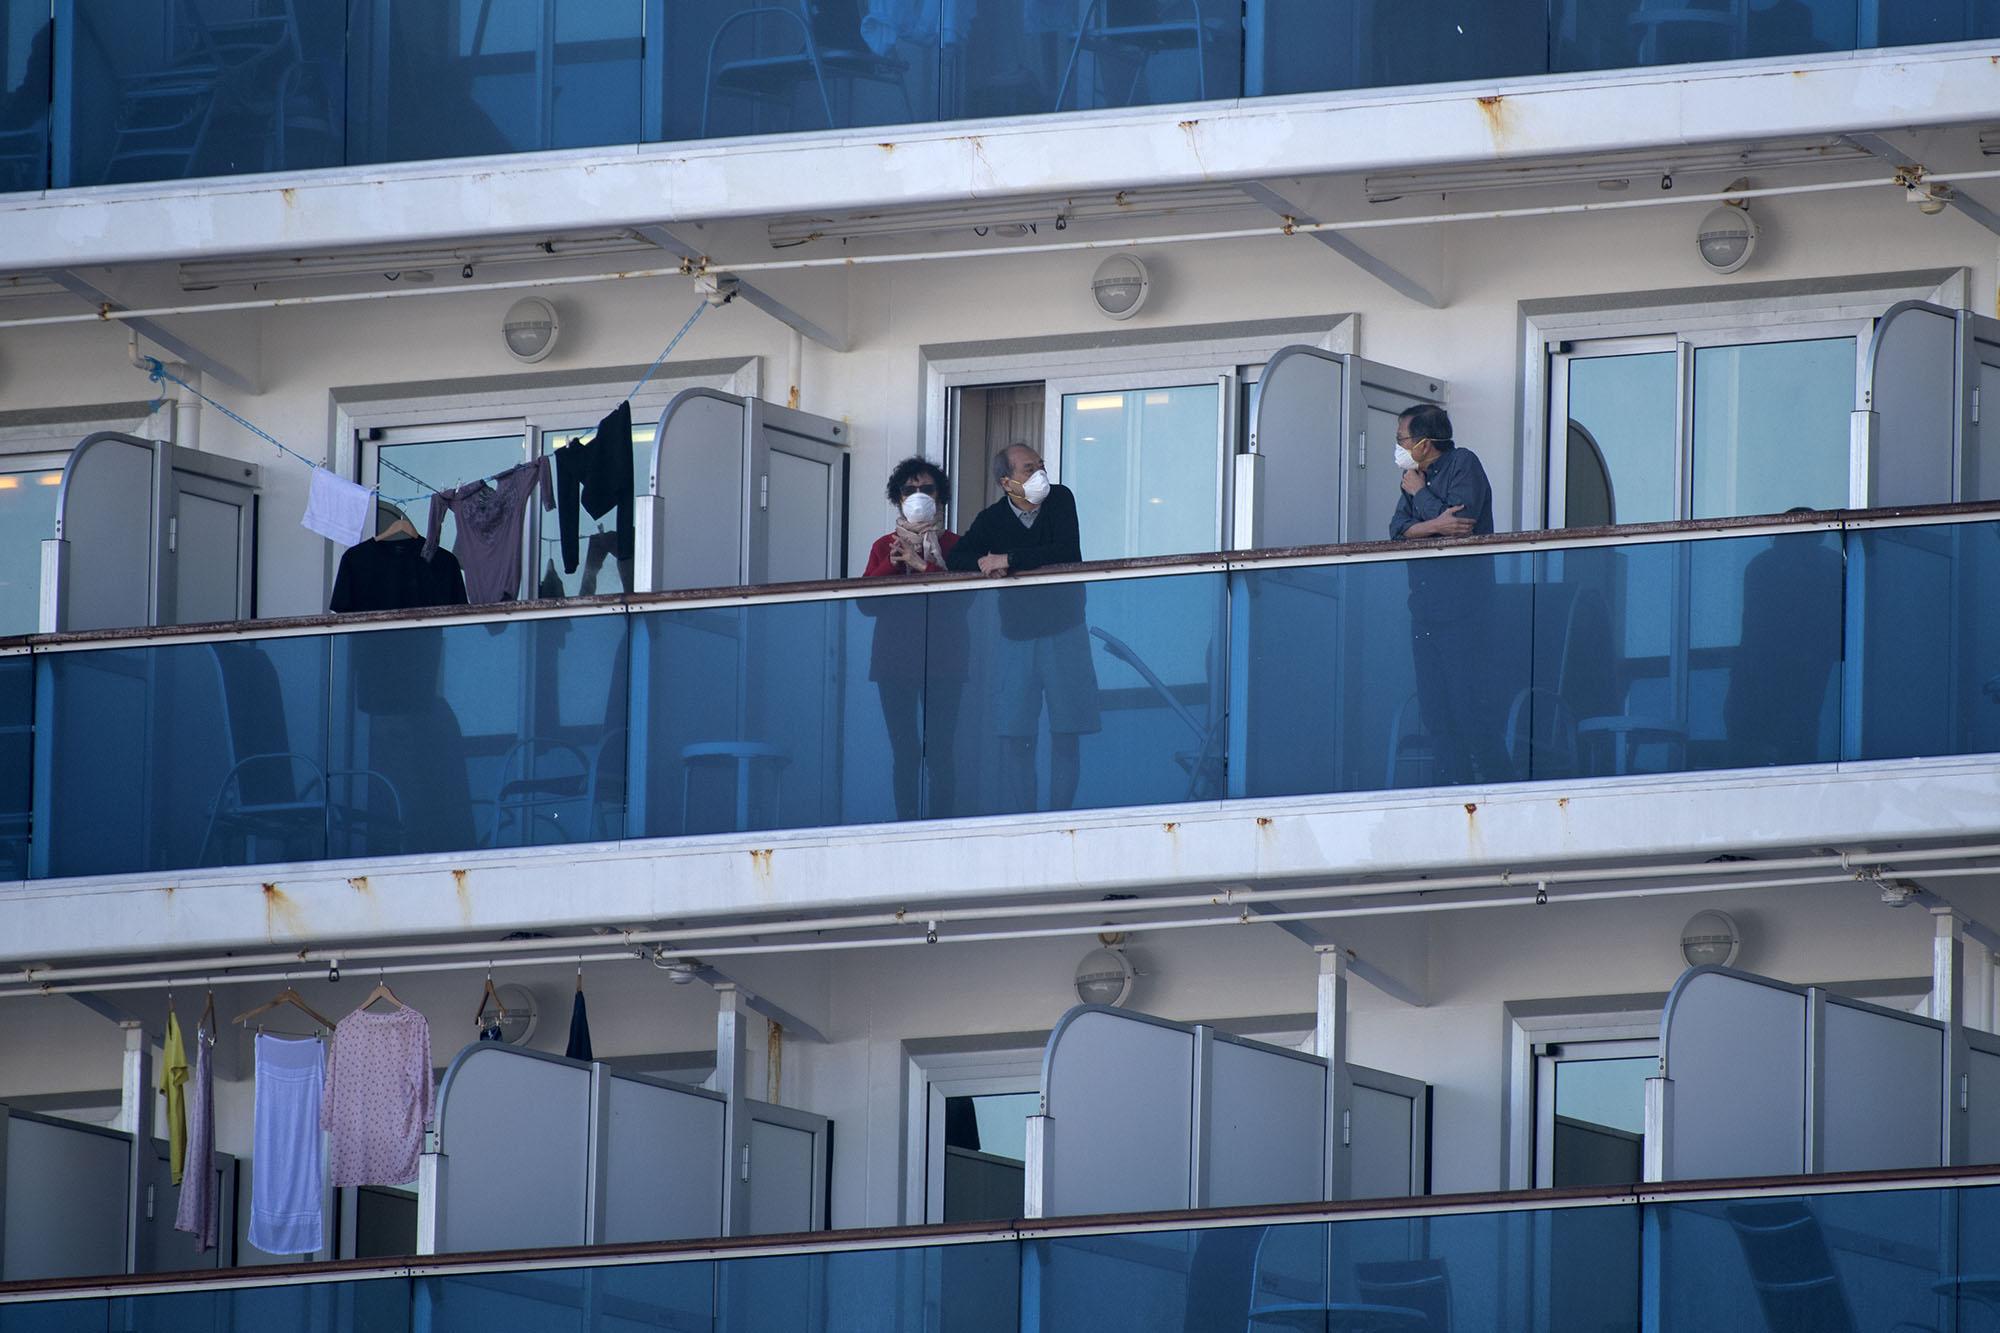 Passengers of the Diamond Princess cruise ship stand on their cabins balconies at the Daikoku Pier Cruise Terminal in Yokohama, Japan, on February 13, 2020. (Alessandro Di Ciommo/NurPhoto/Zuma Press/TNS)